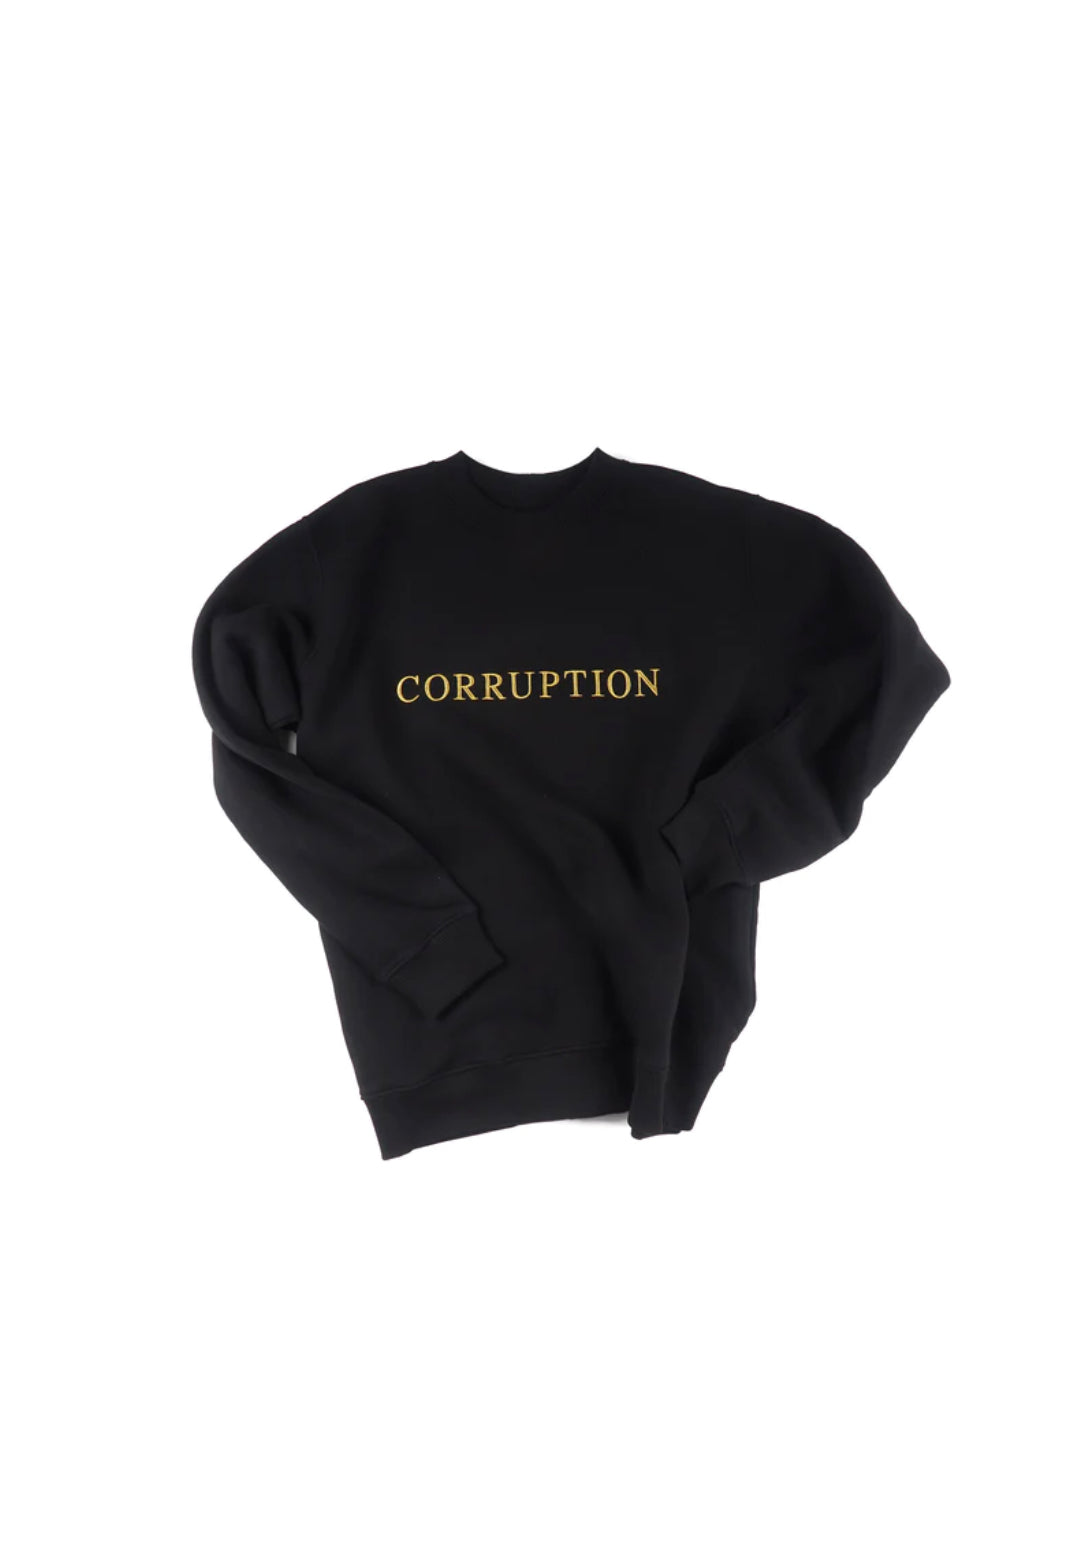 Corruption Sweatshirt image